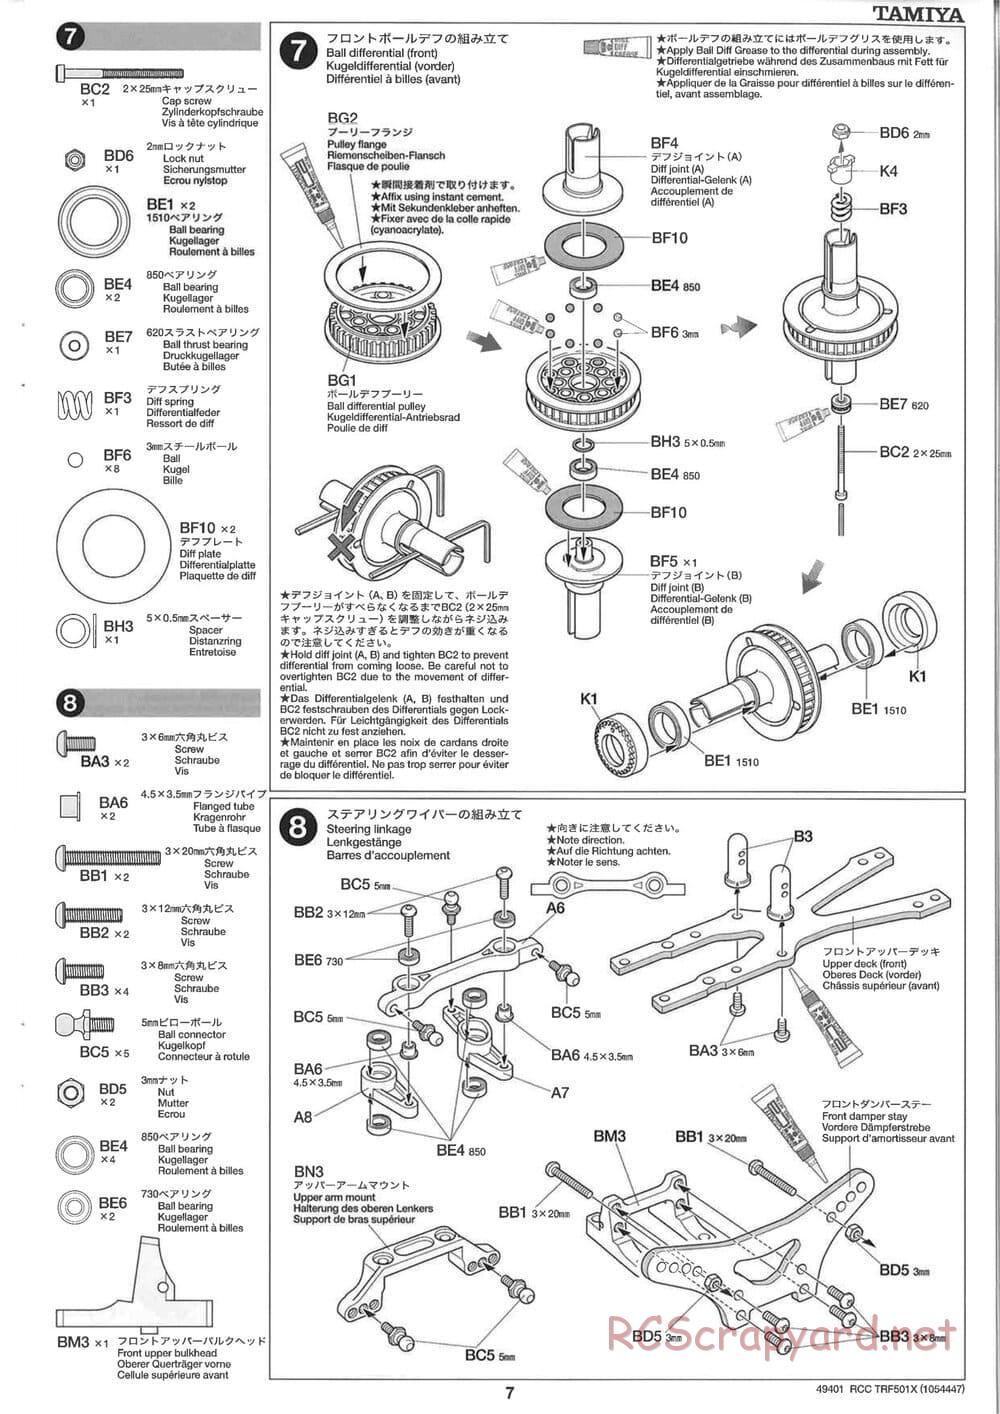 Tamiya - TRF501X Chassis - Manual - Page 7